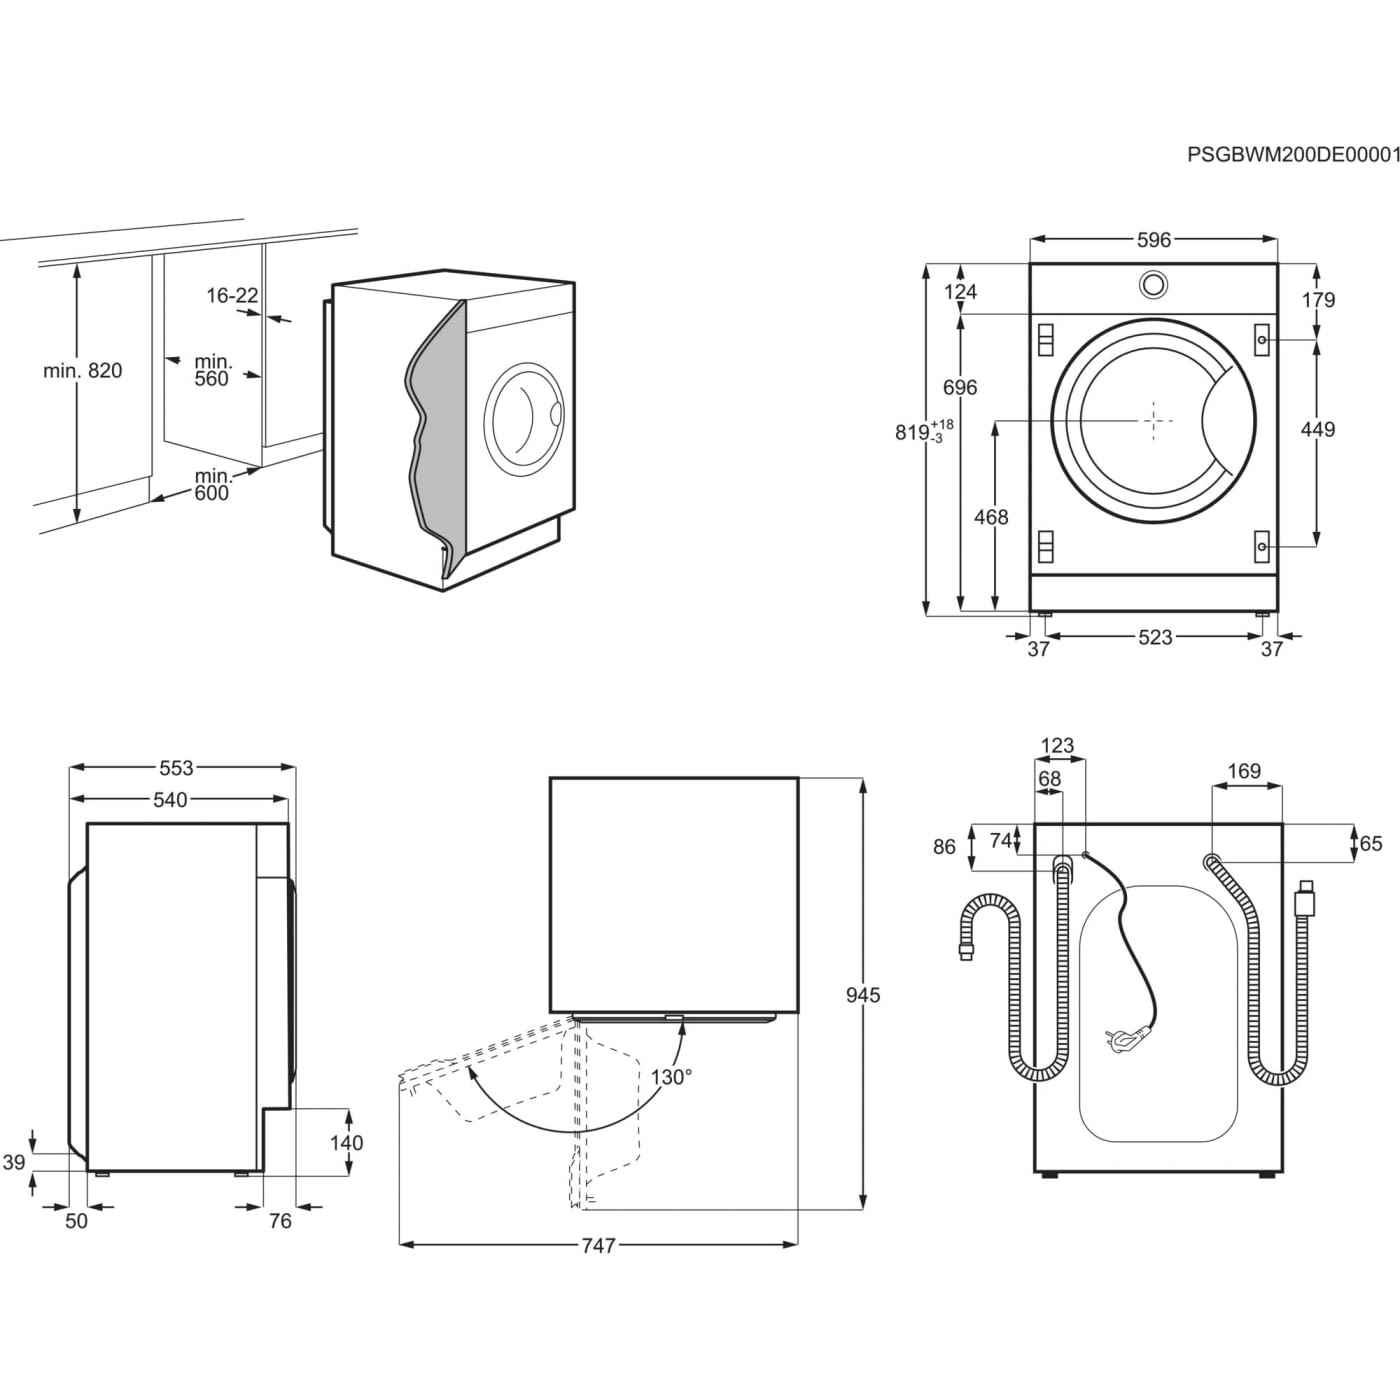 Lavadora secadora integrable Serie 7000 ProSteam® de 8 kg Lavadora